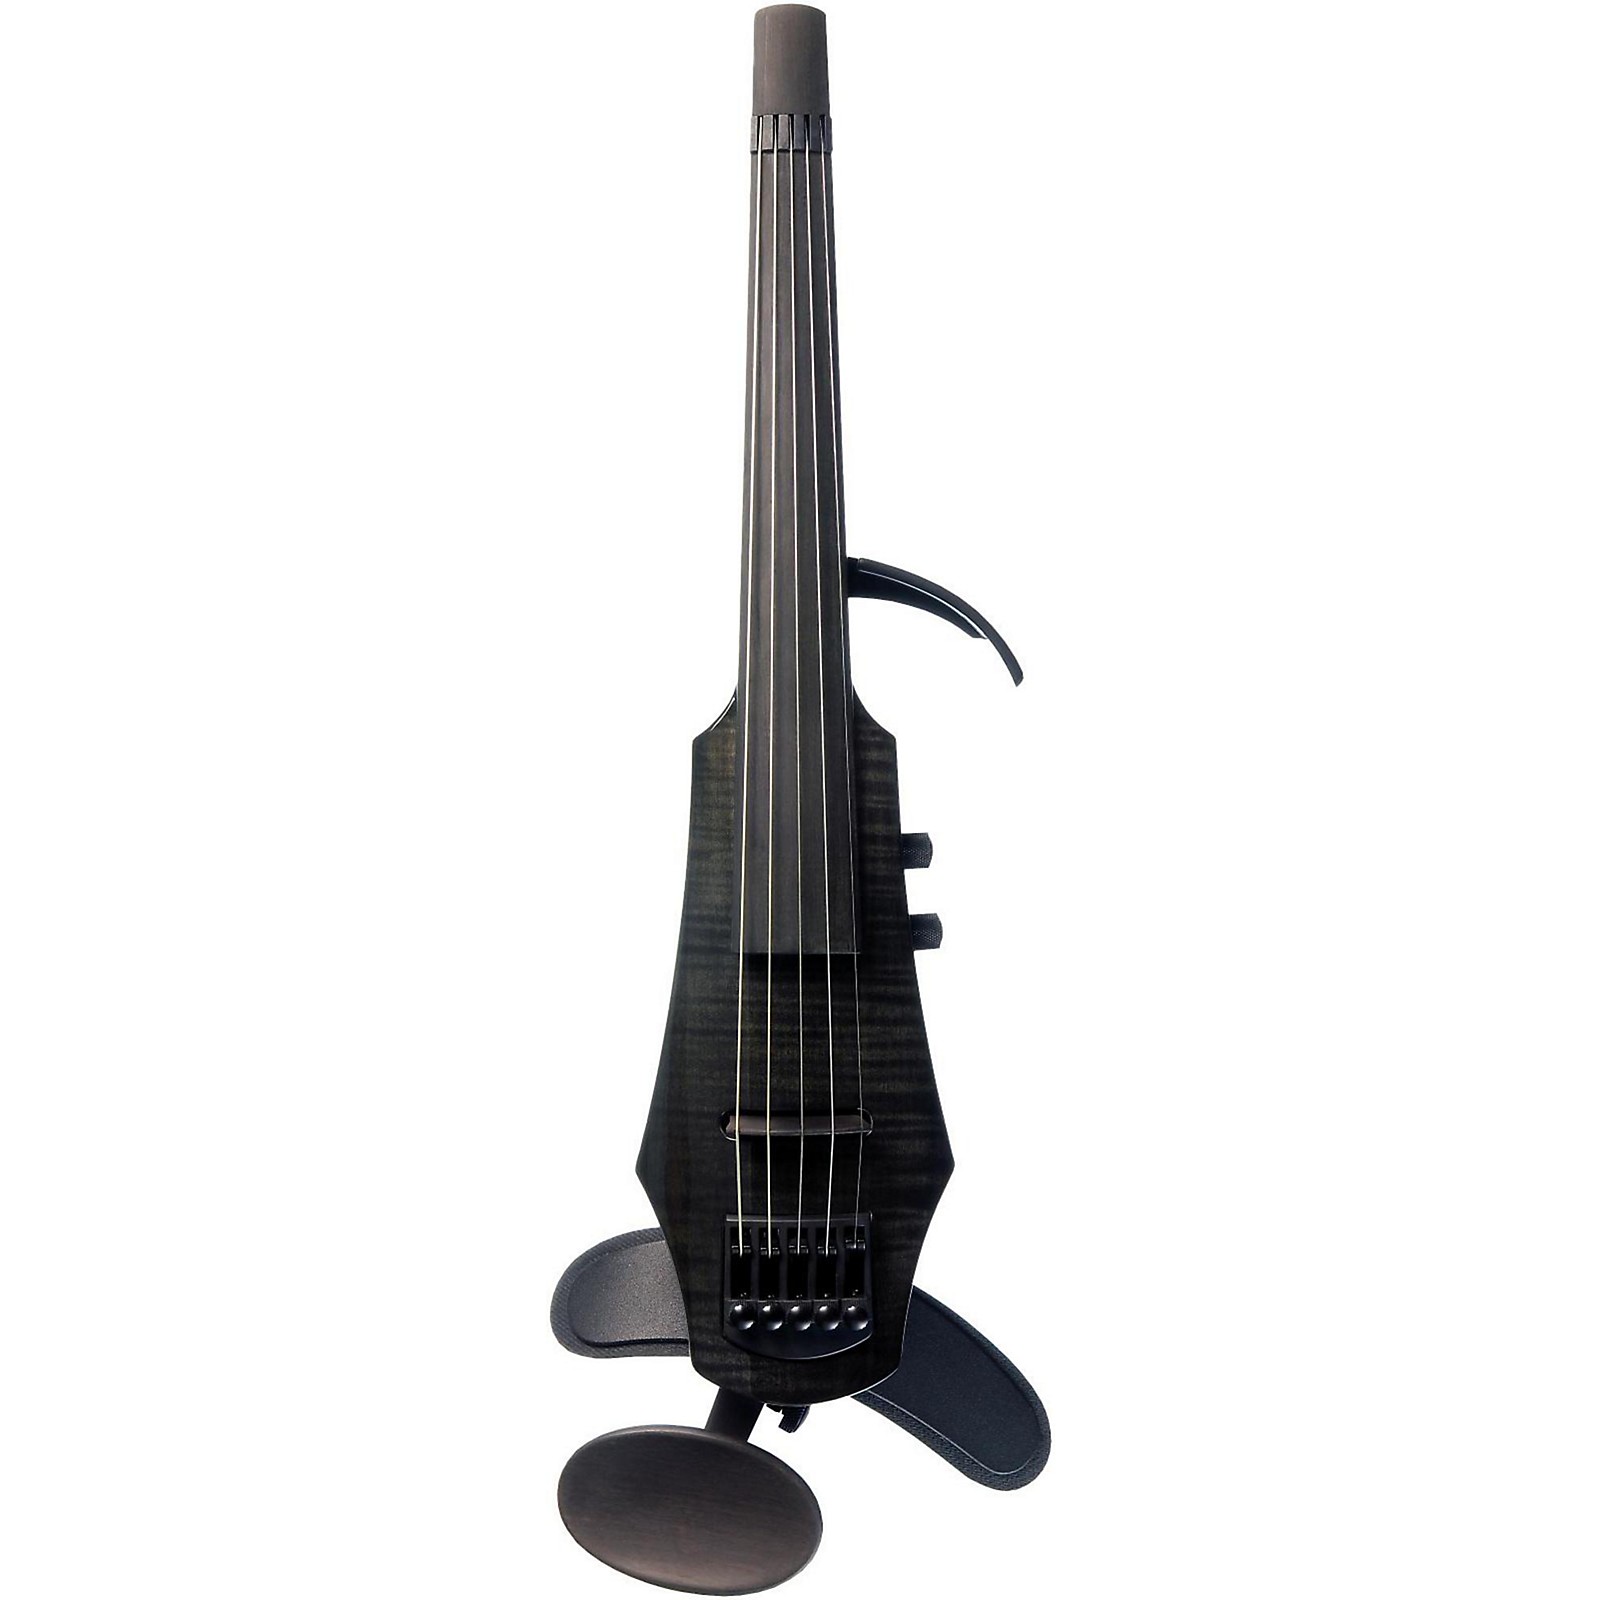 NS Design WAV 5 5-String Electric Violin Black | Musician ...